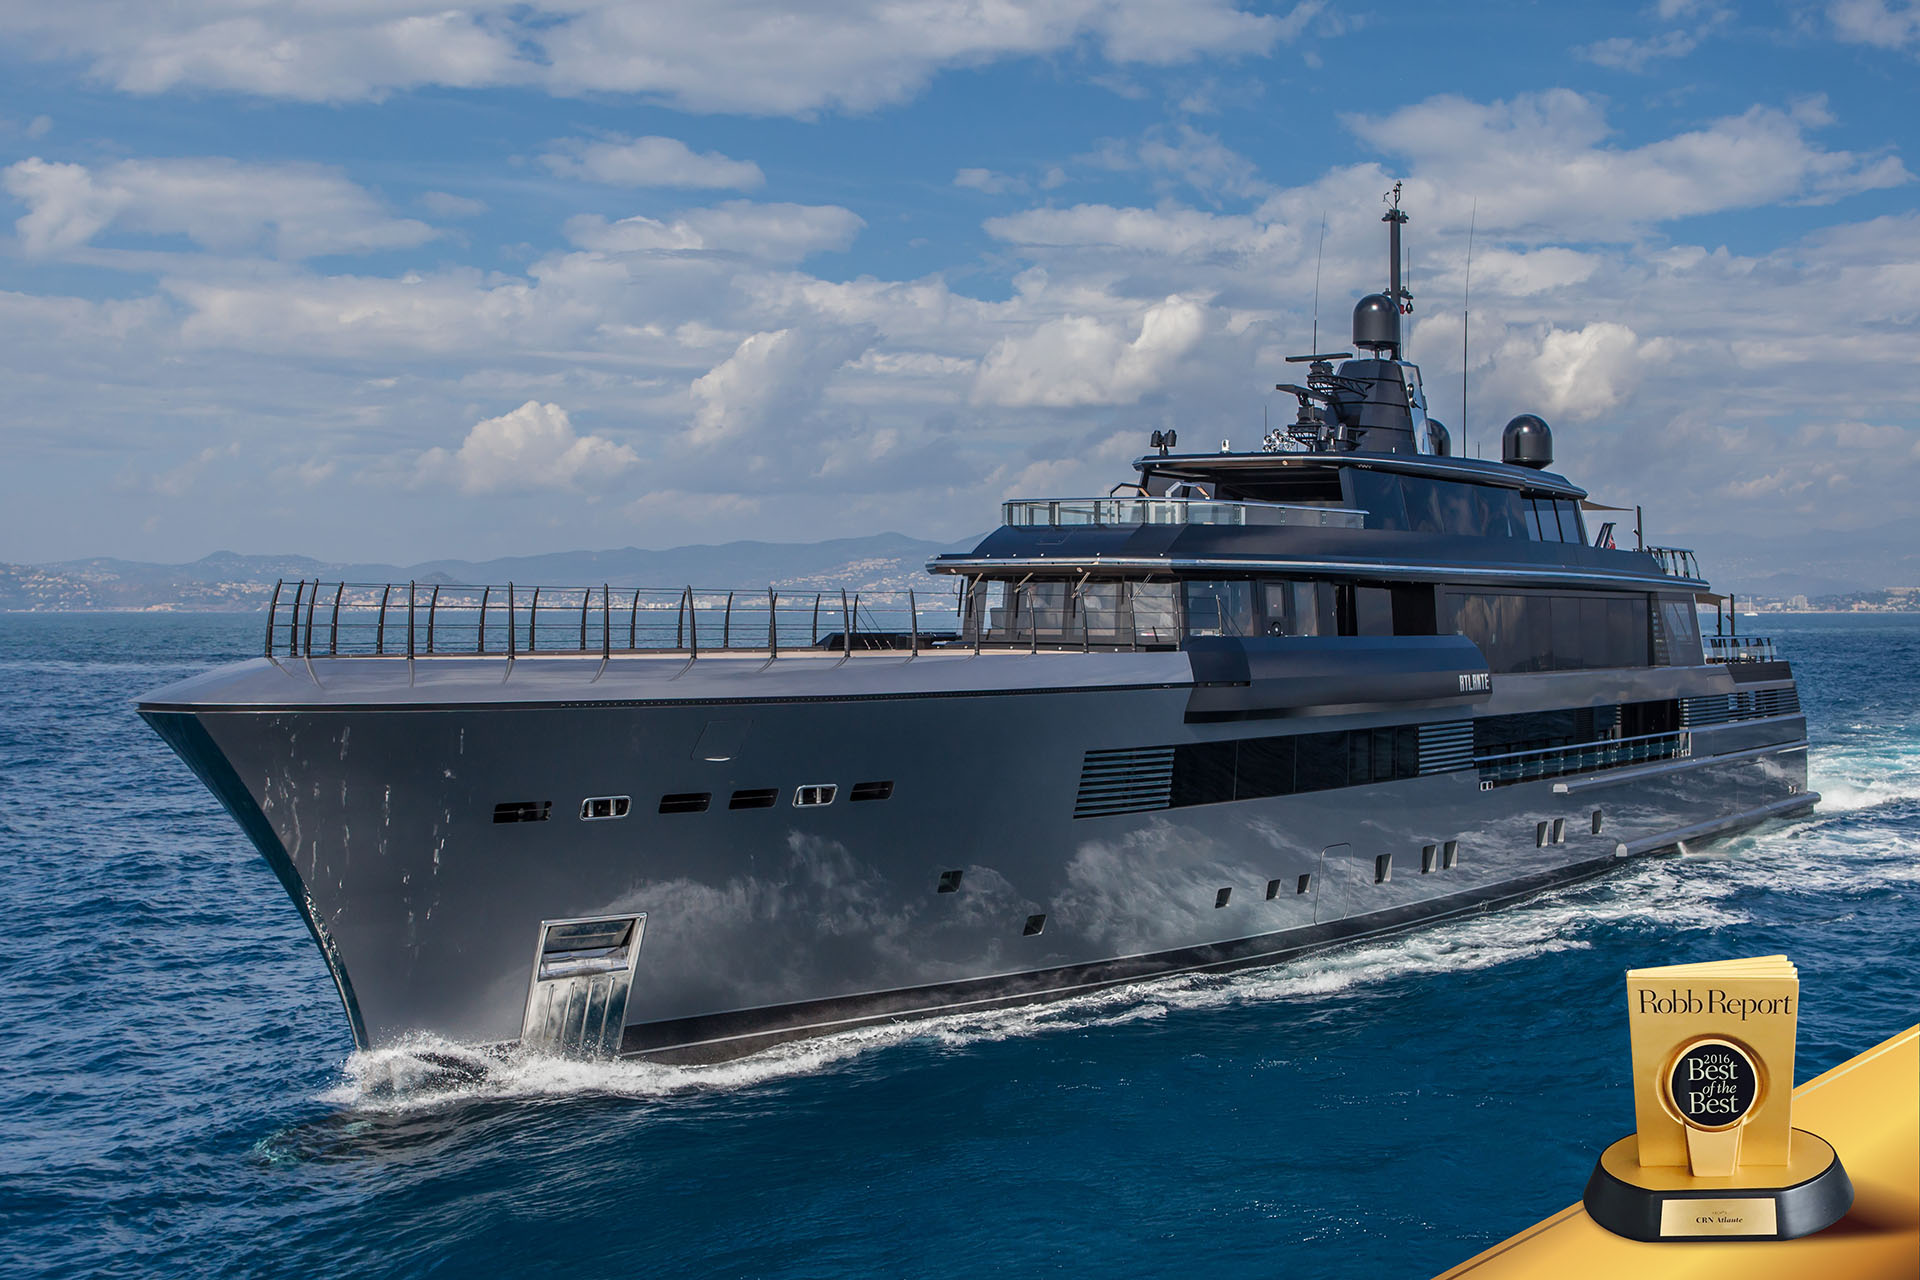 The Italian shipbuilder’s 55-metre vessel received the prestigious award at the latest Monaco Yacht Show